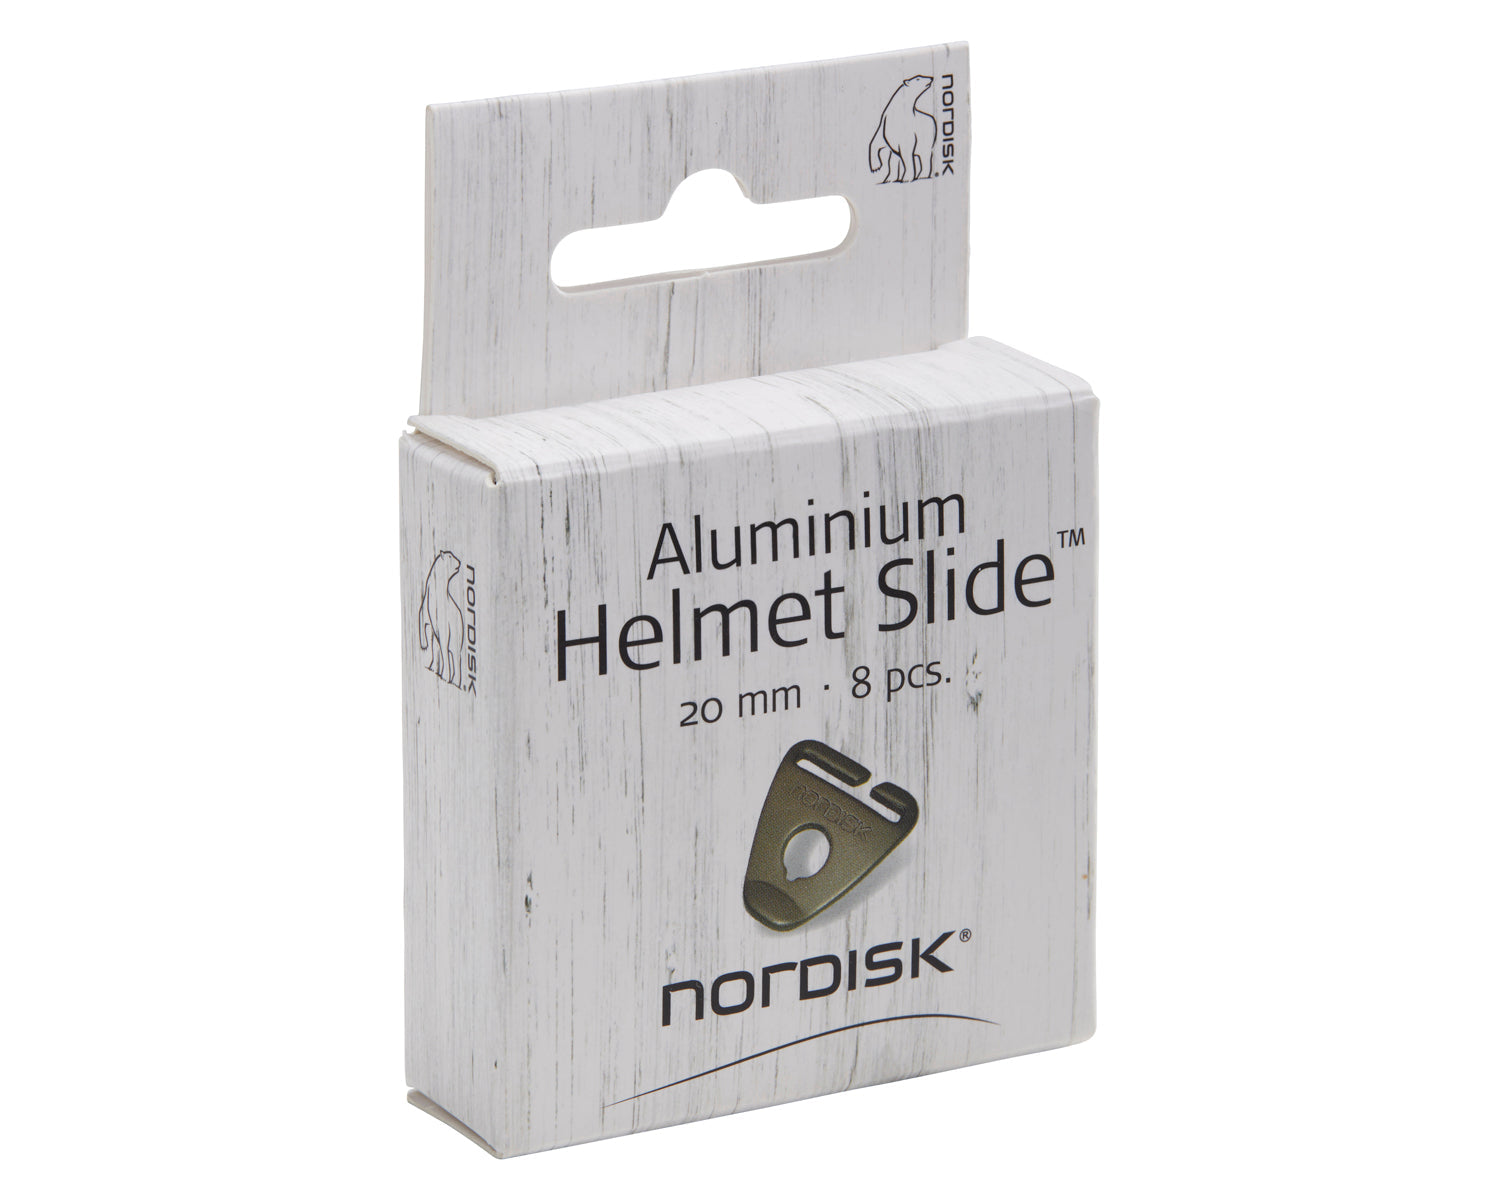 Aluminium Helmet Slide 20mm (8pcs) - Mud brown